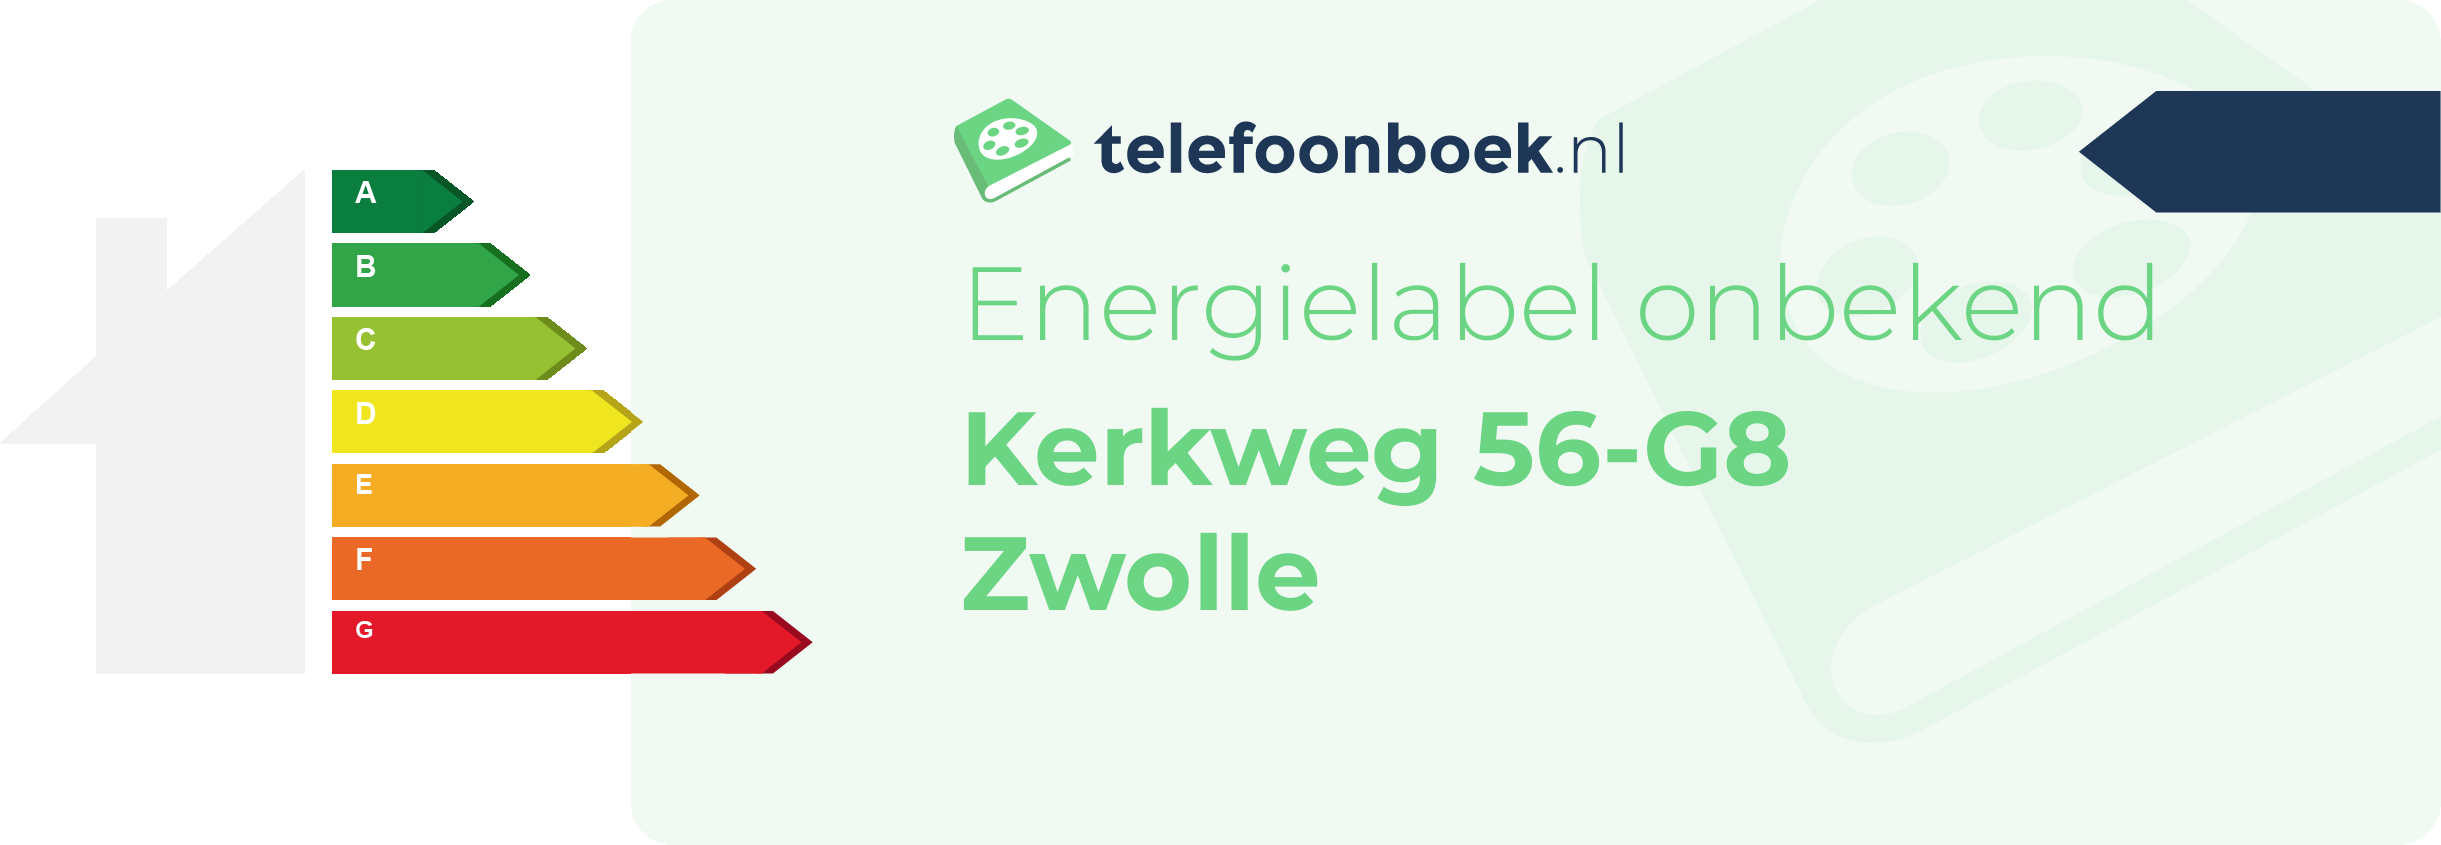 Energielabel Kerkweg 56-G8 Zwolle